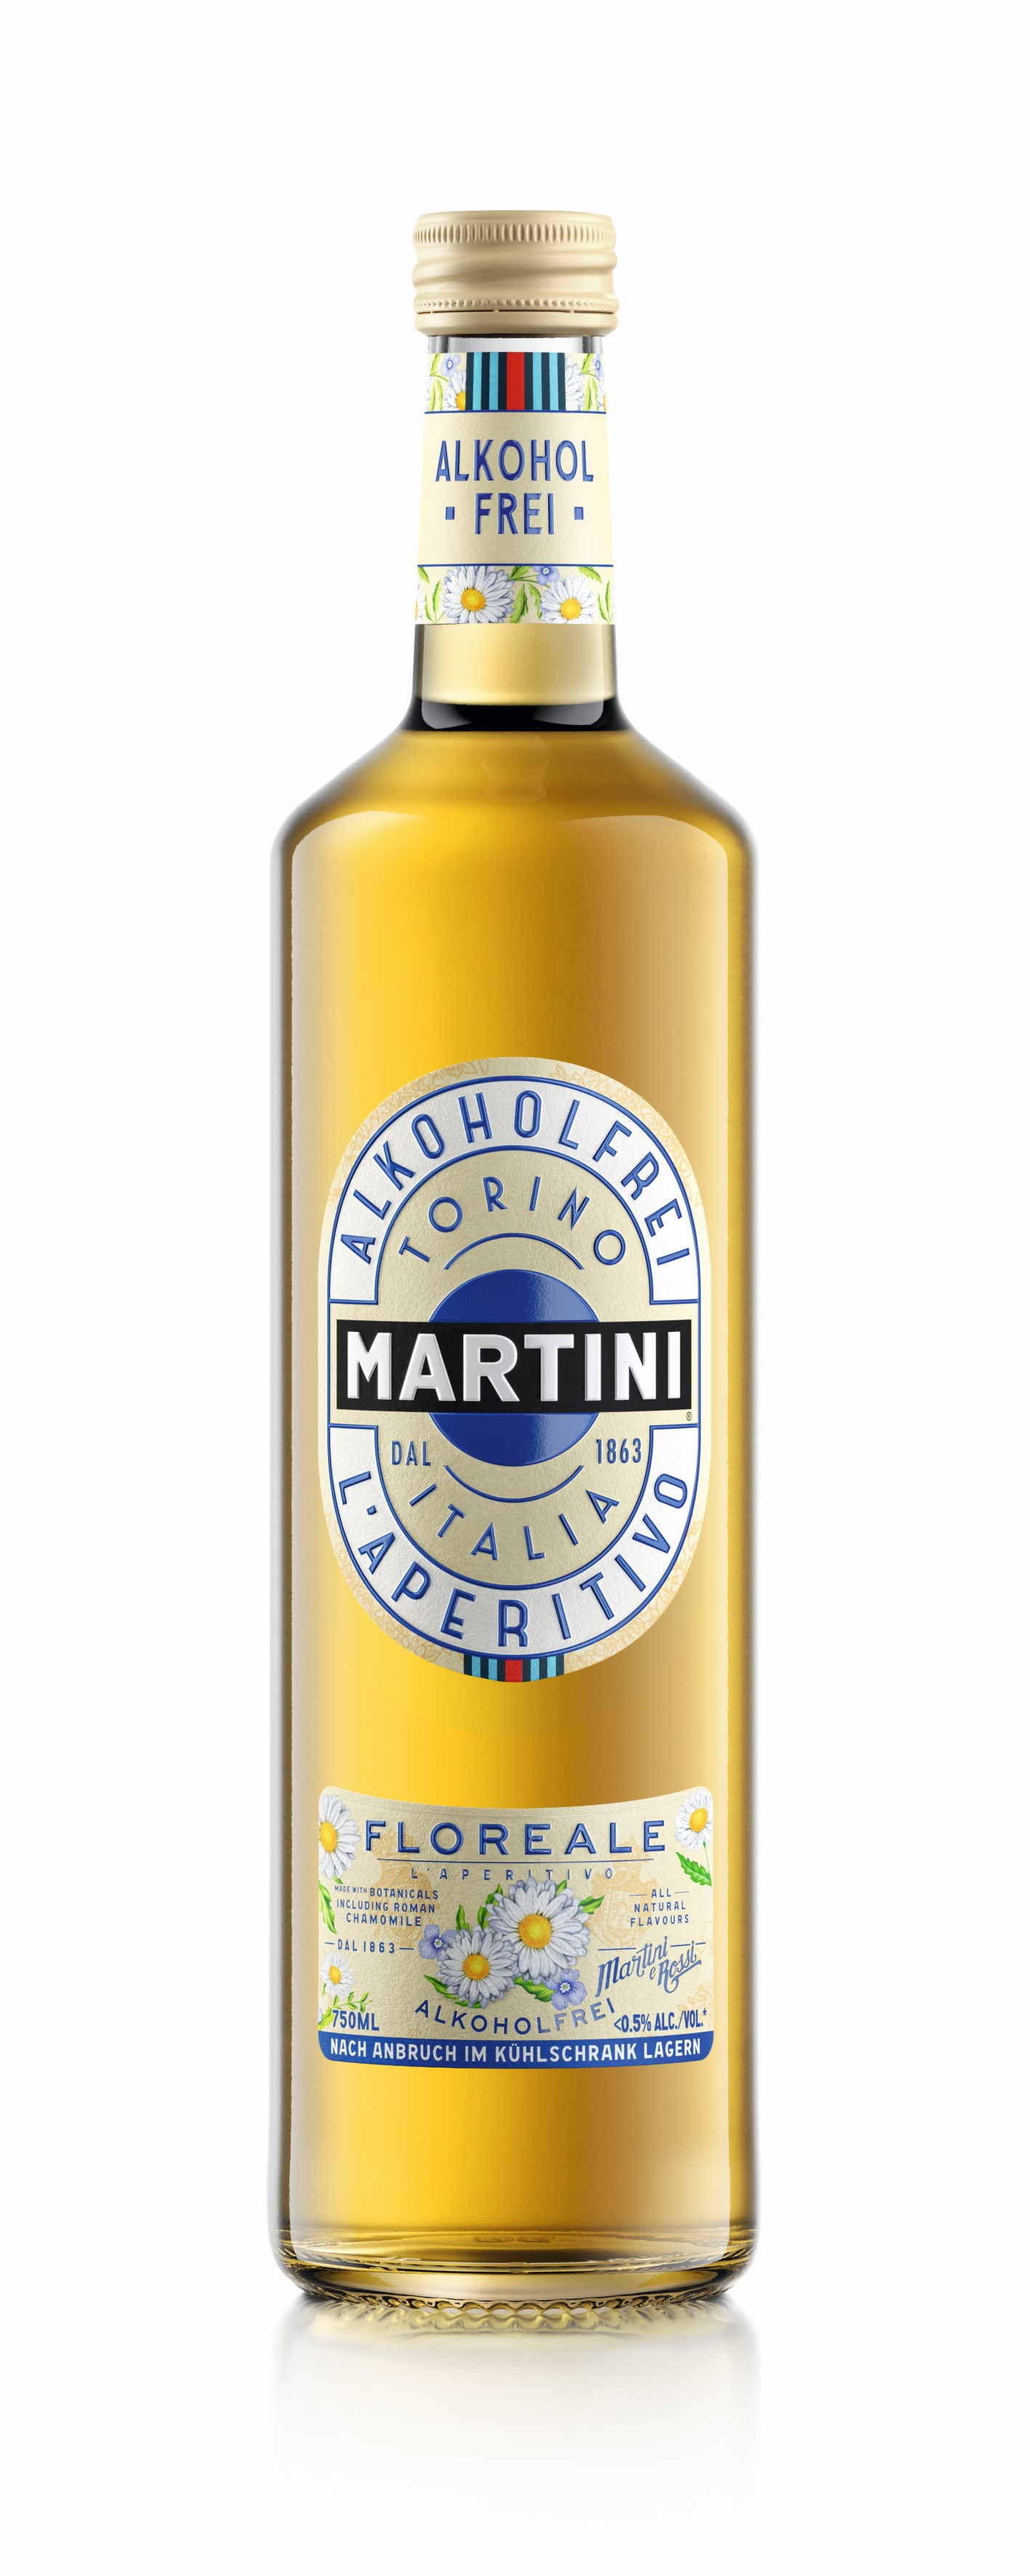 Martini Floreale - Aperitivo alkoholfrei  0,75